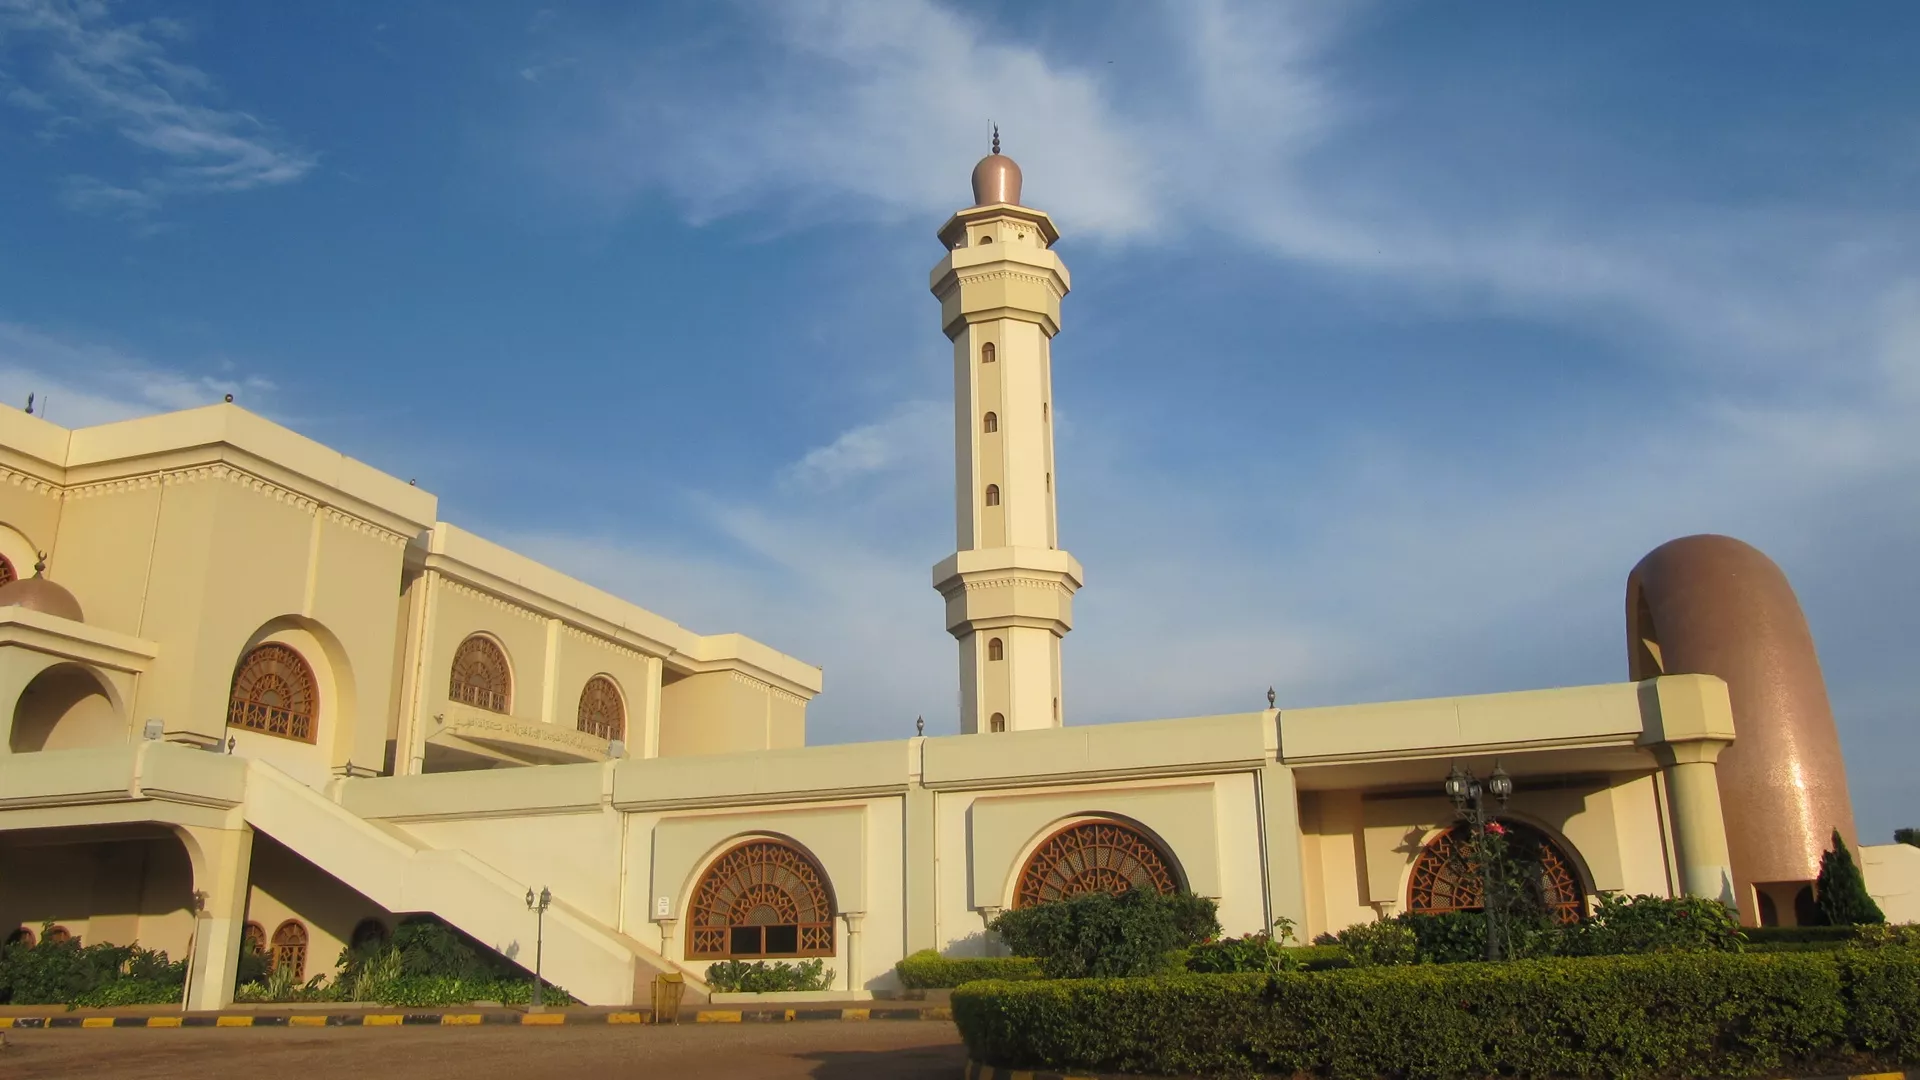 Kibuli Mosque in Uganda, Africa | Architecture - Rated 0.8